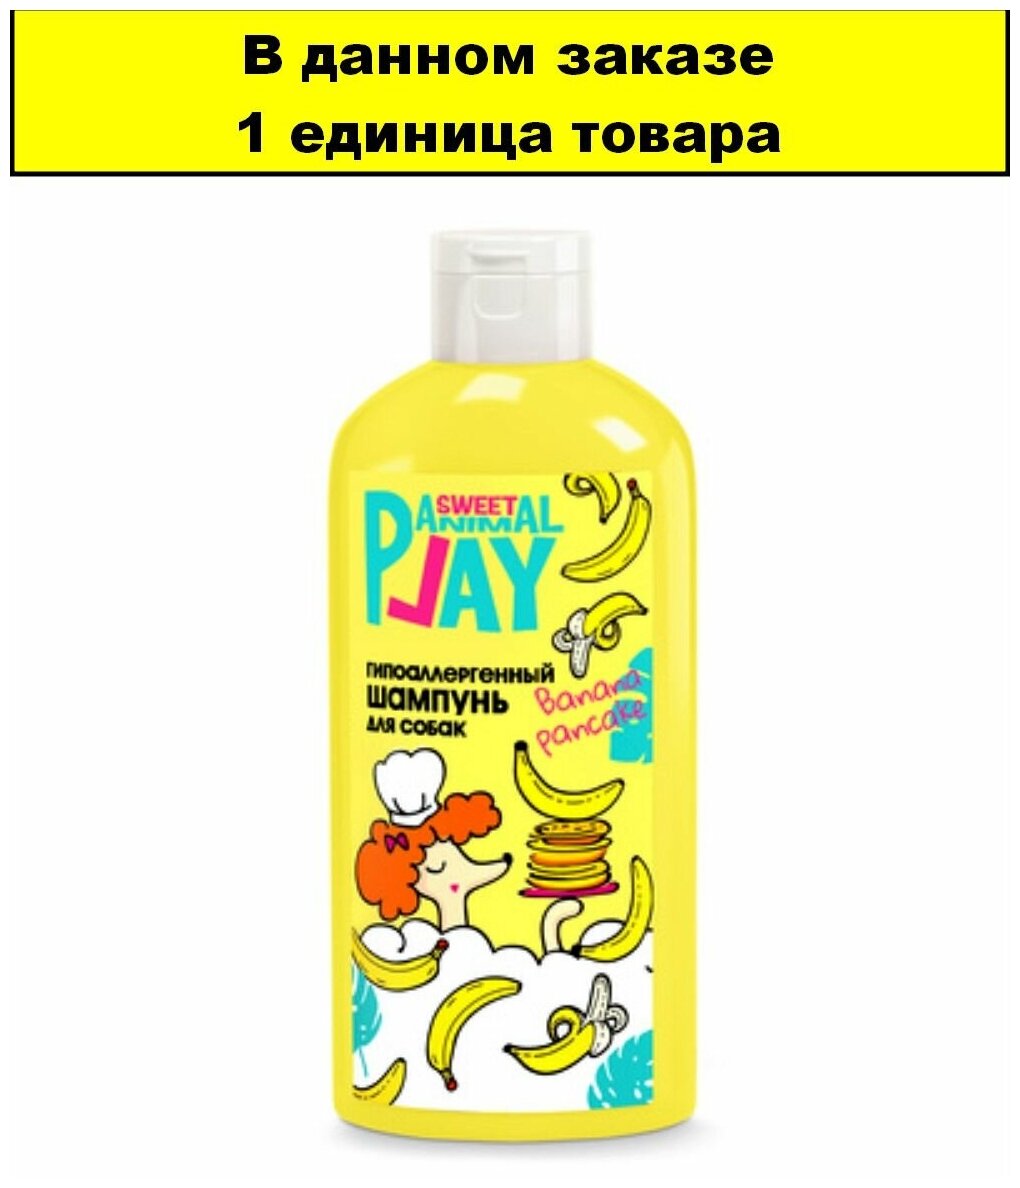 Animal Play Sweet шампунь гипоаллергенный банановый панкейк (300 мл.) - фото №2